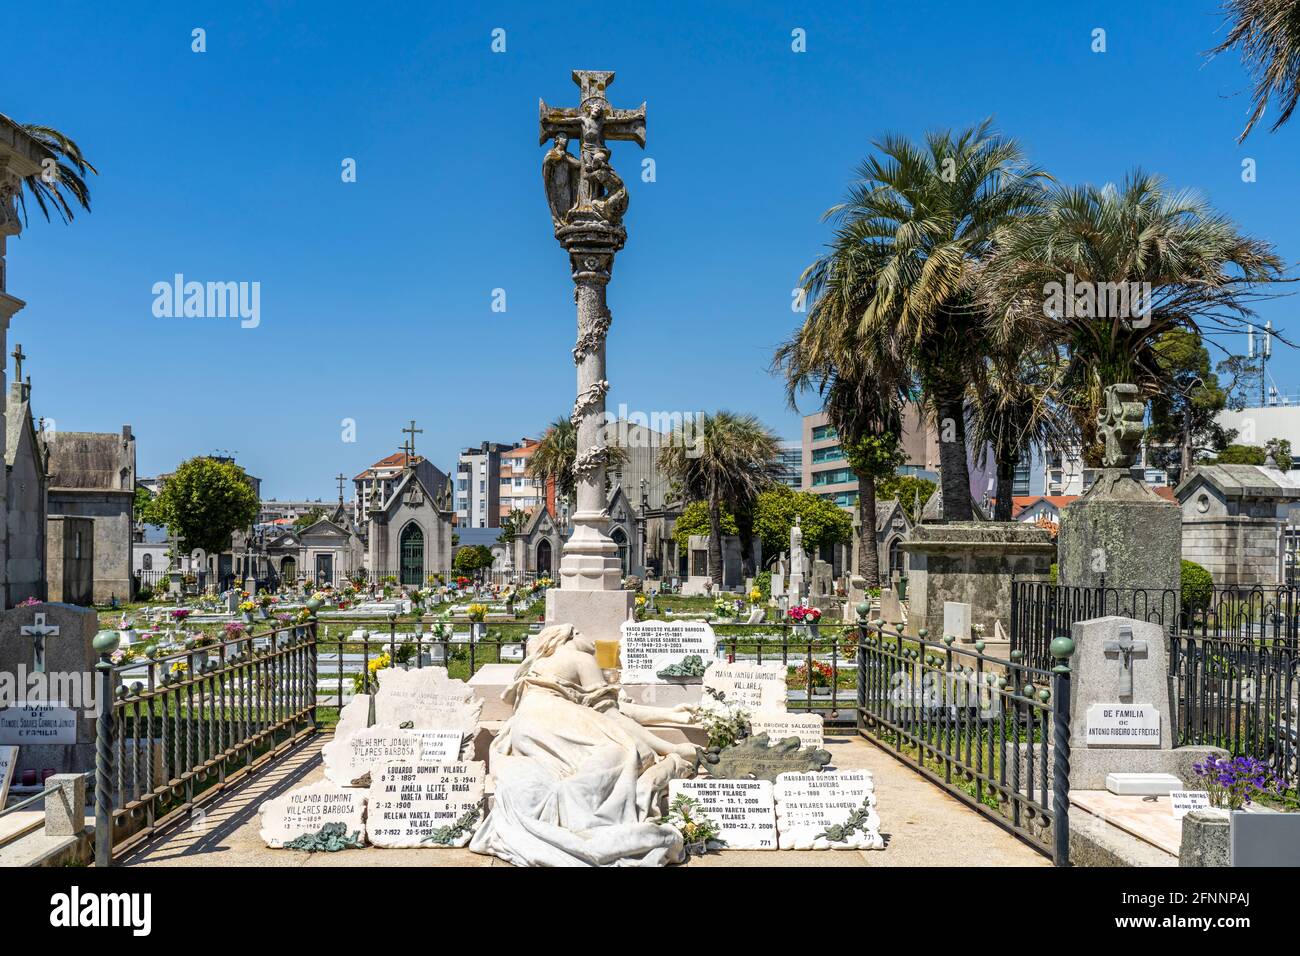 Friedhof Cemitério de Agramonte in Porto, Portugal, Europa   |  Cemetery Cemitério de Agramonte in Porto, Portugal, Europe Stock Photo